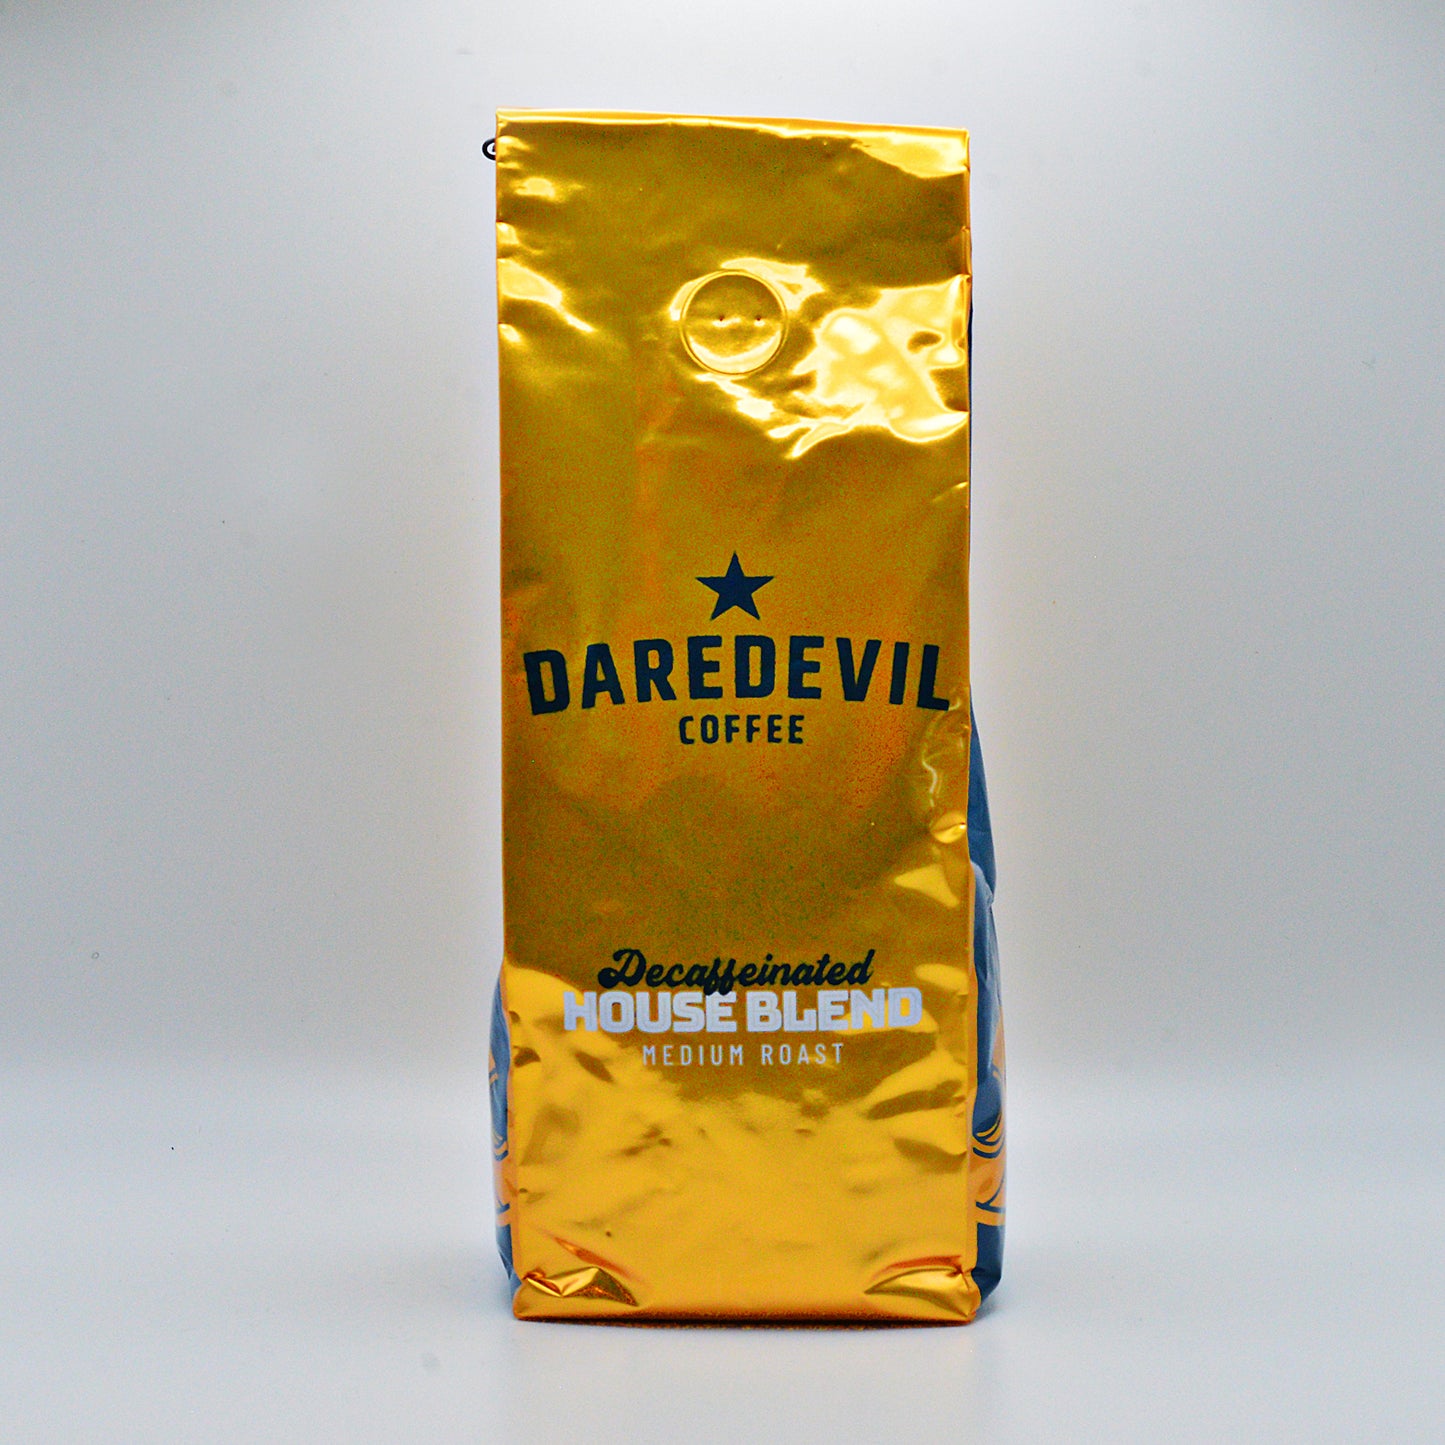 Daredevil Coffee - Decaf House Blend 12oz Bag